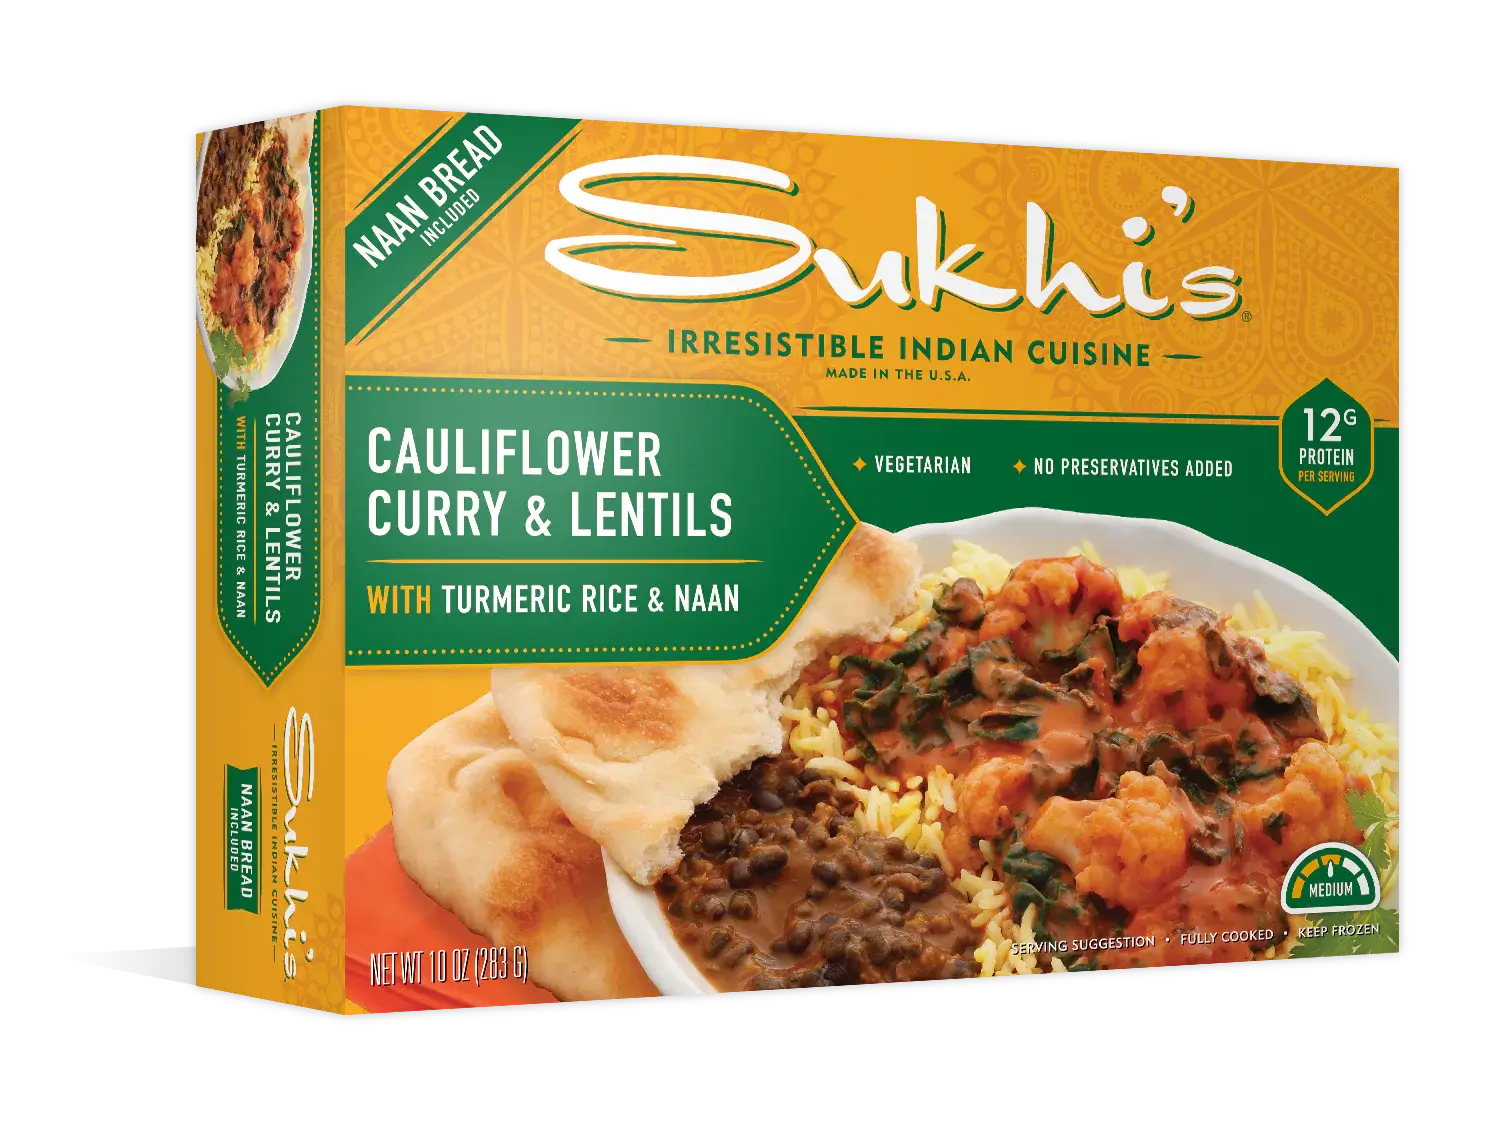 Cauliflower Curry & Lentils